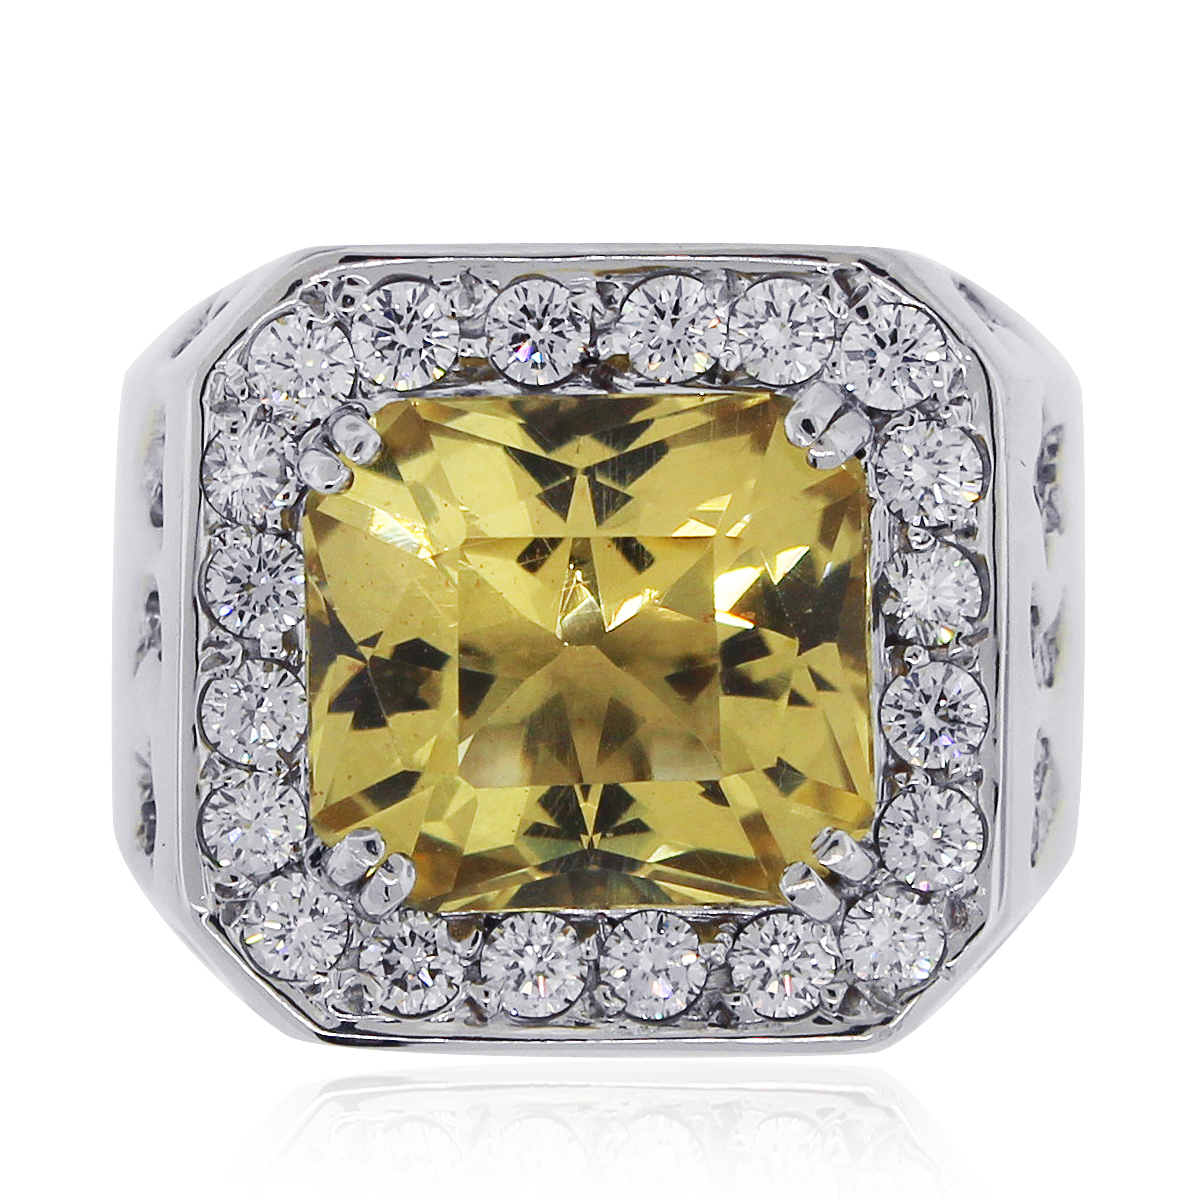 Diamond Gents Ring at Rs 70000 | Malad East | Mumbai | ID: 7635821862